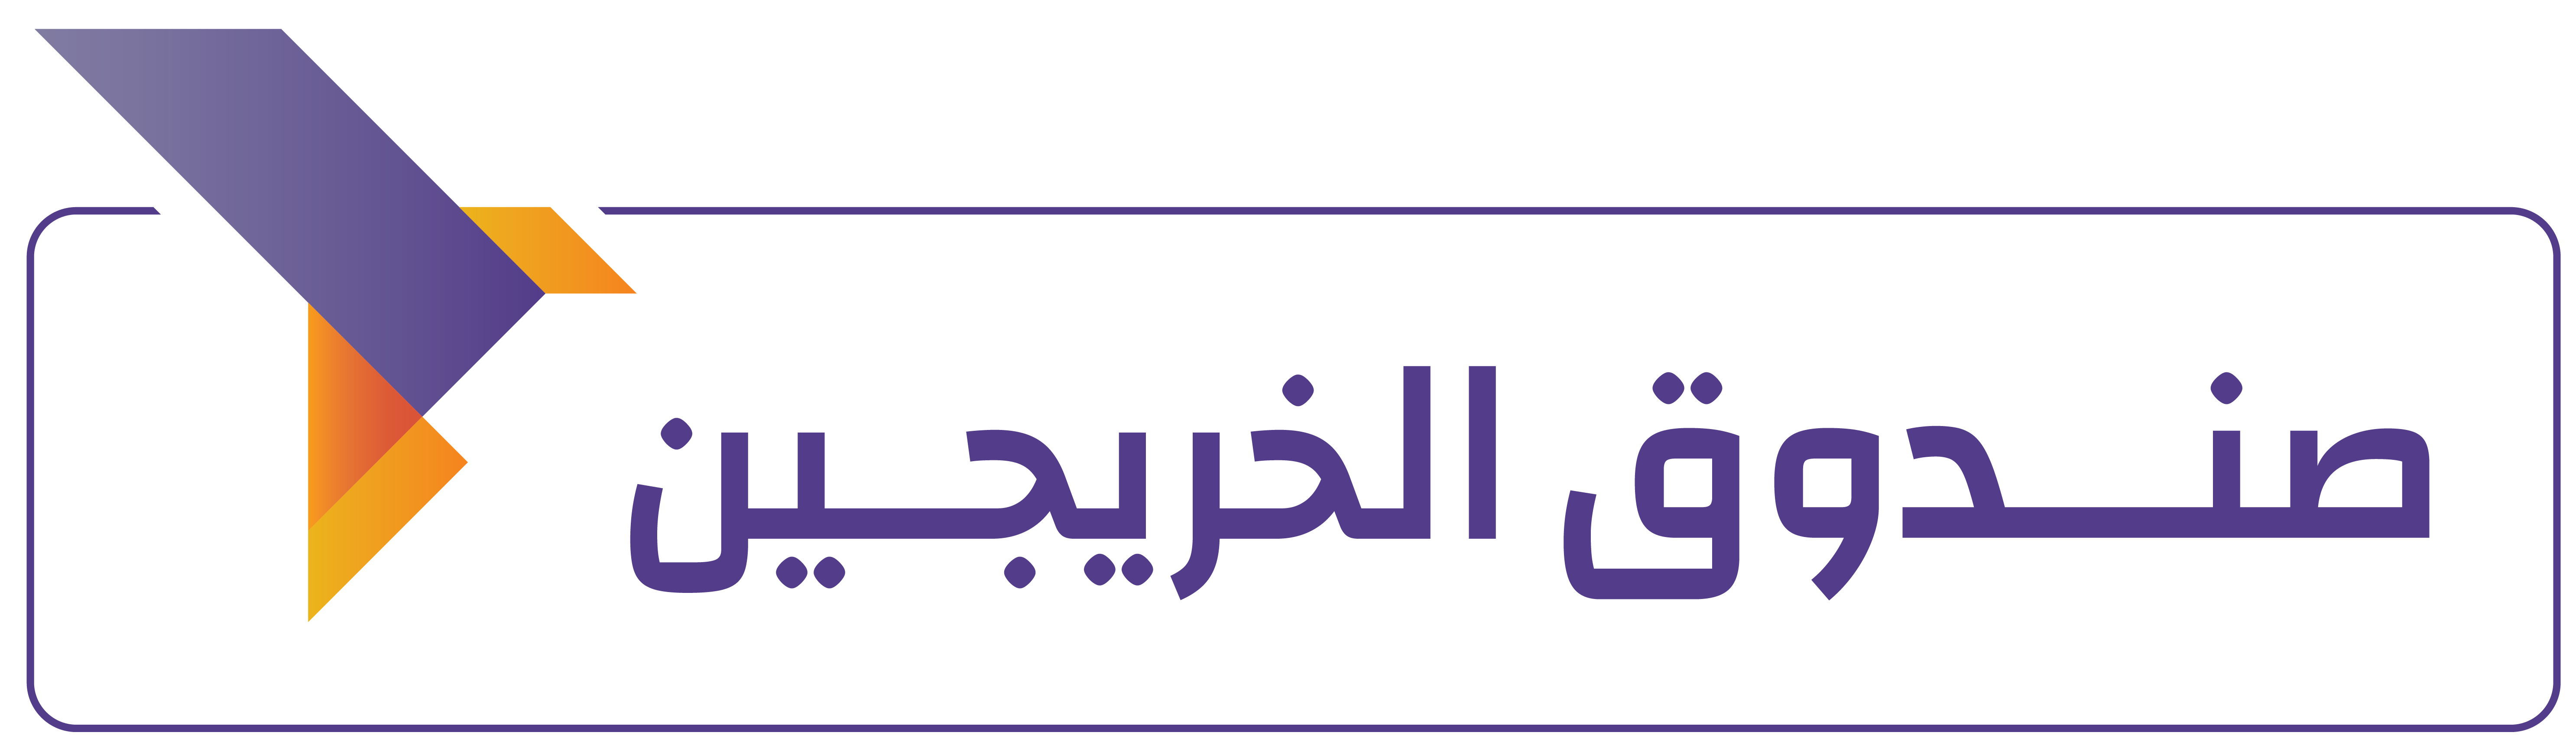 Grand Fund Logo